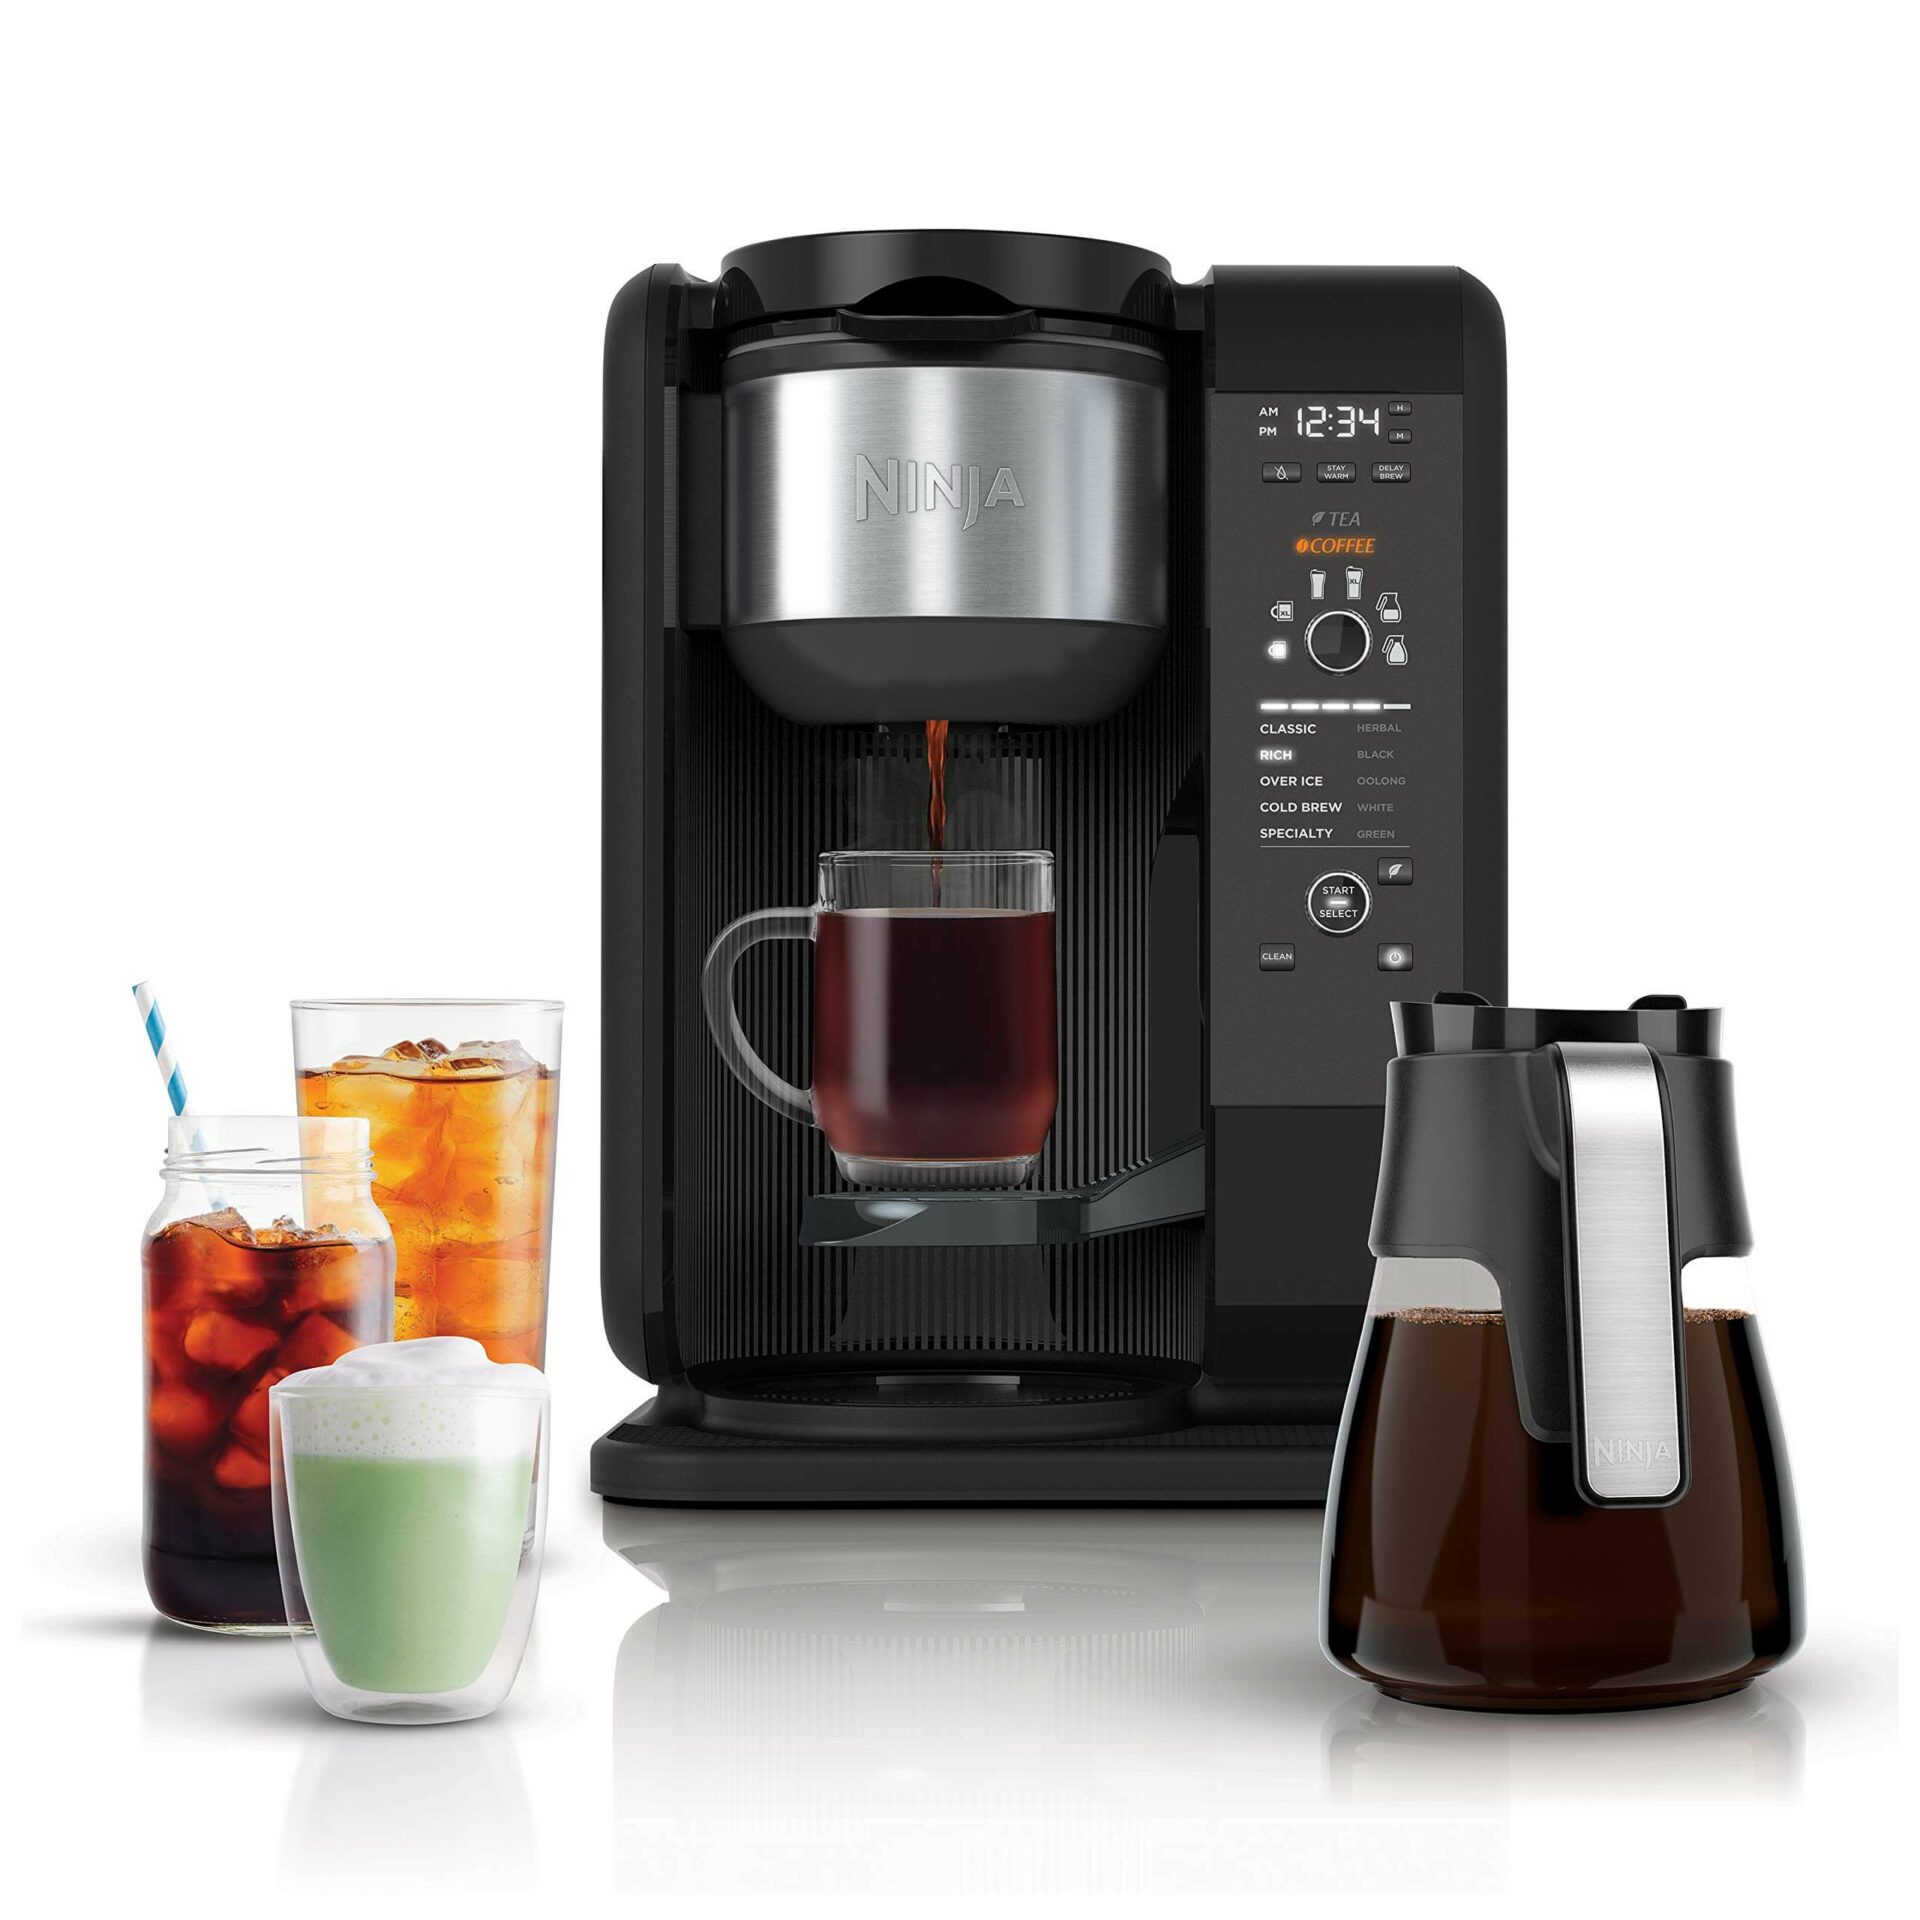 Ninja Hot and Cold Brewed System, best affordable latte machine, ninja espresso machine, ninja coffee bar espresso